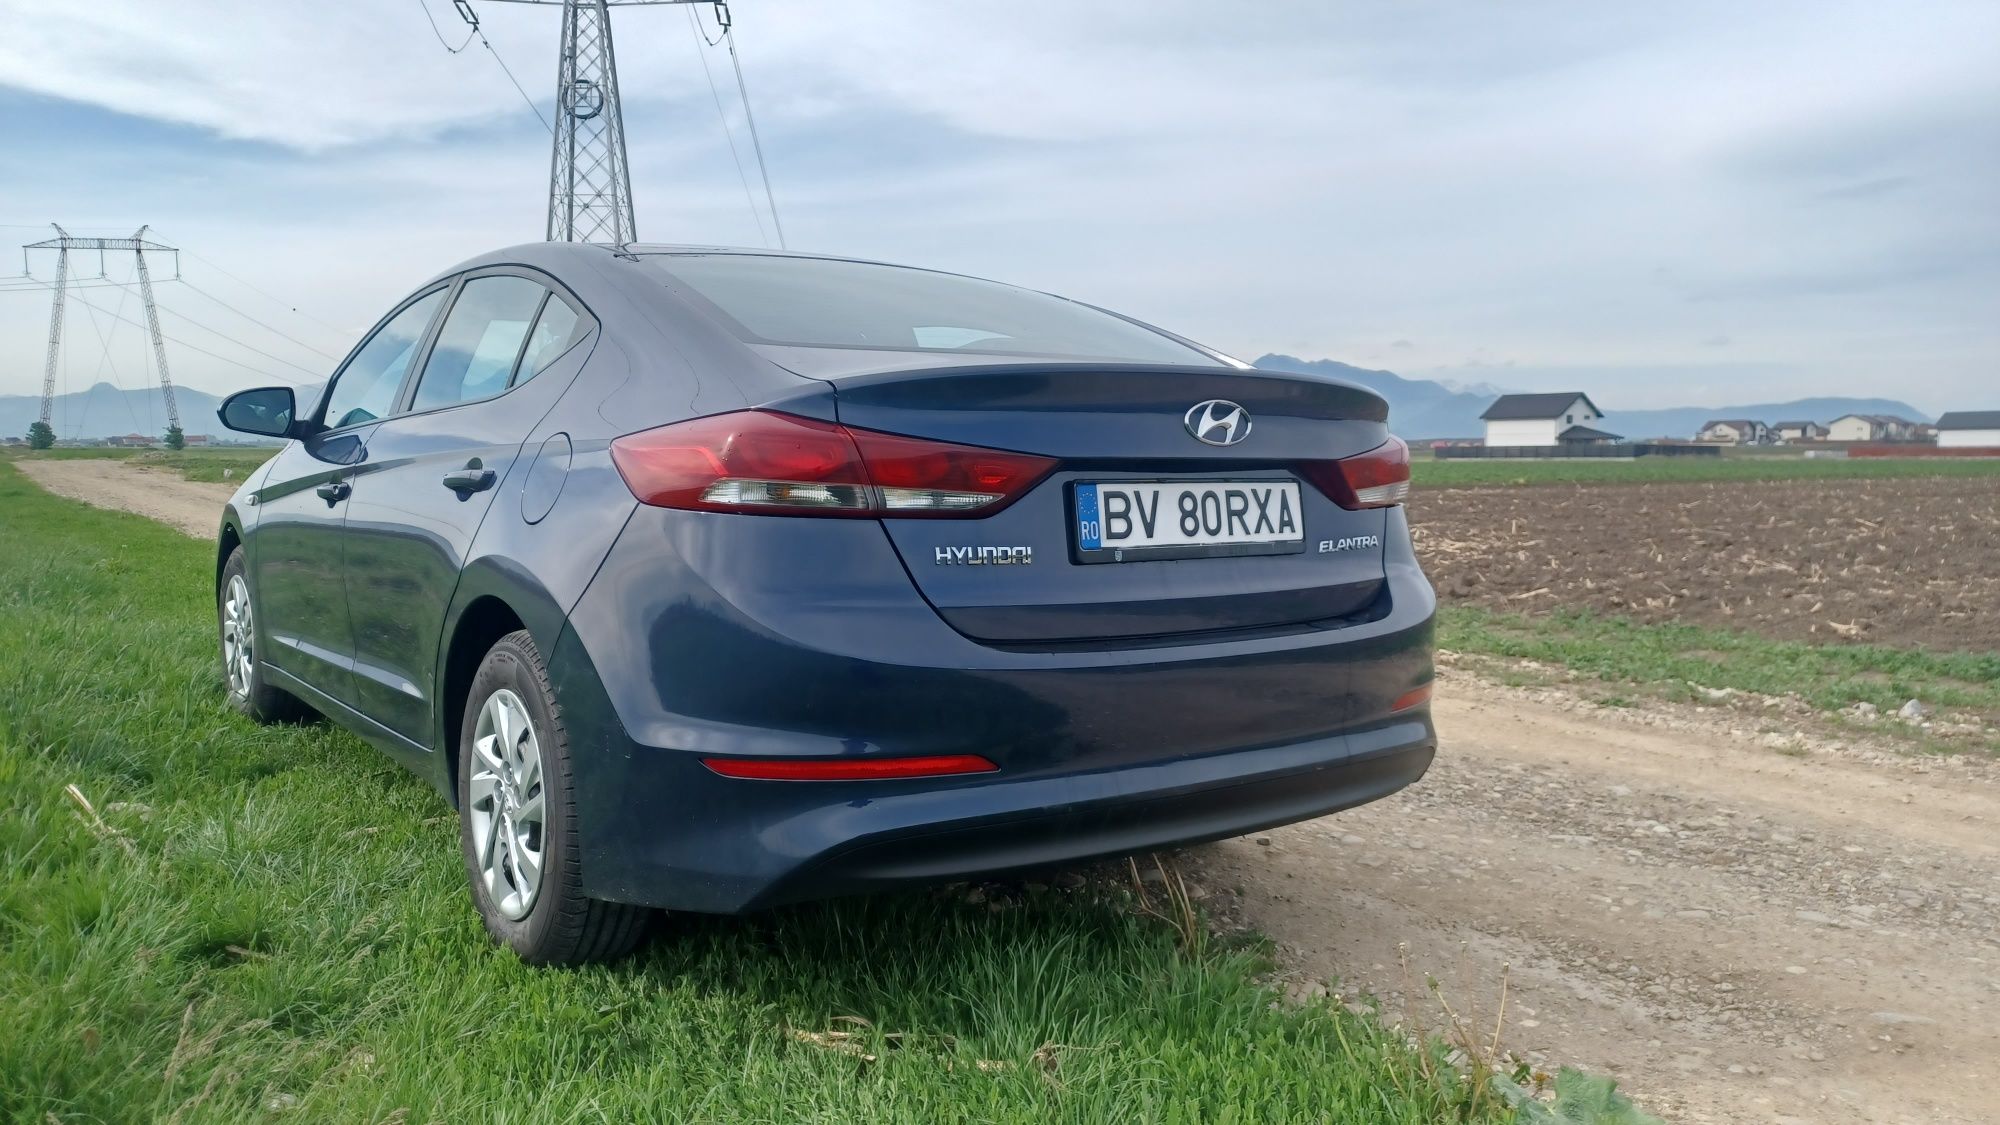 Autoturism marca Hyundai Elantra